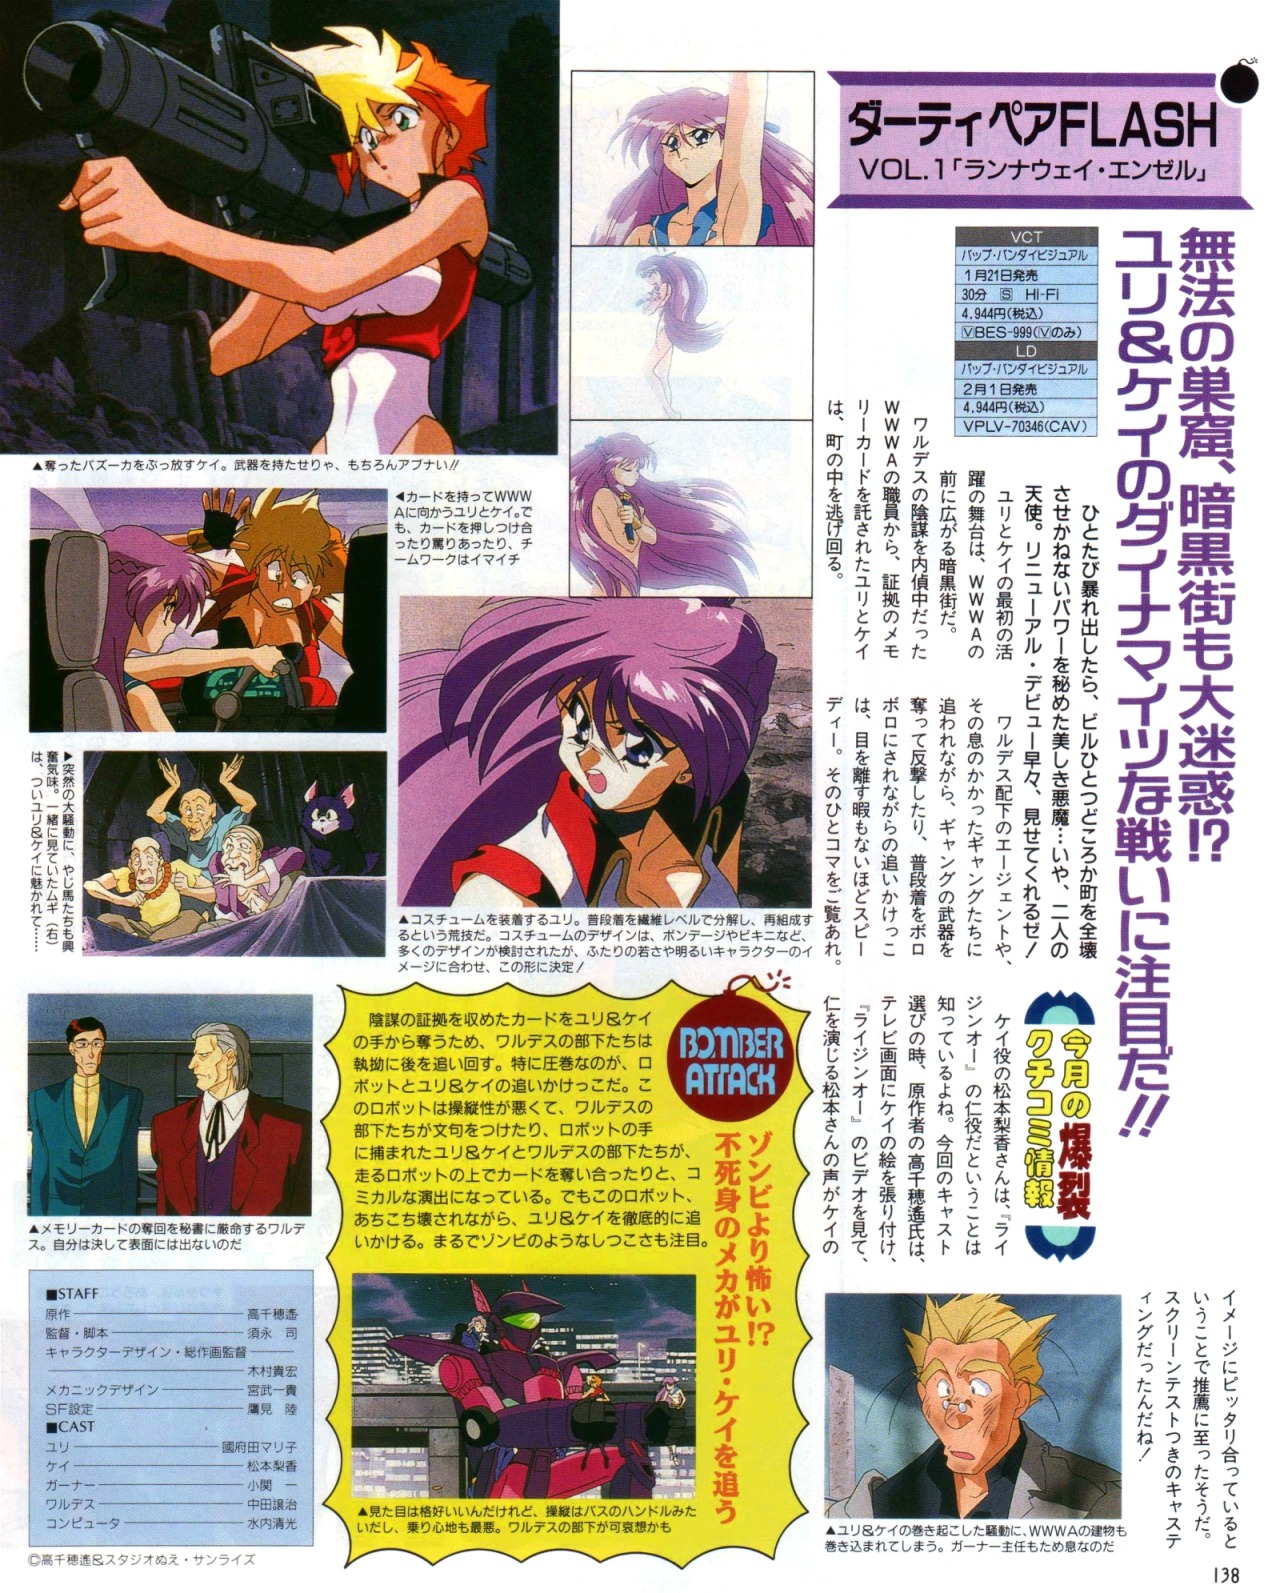 Anim'Archive — Dirty Pair Flash (Anime V, 01/1994)